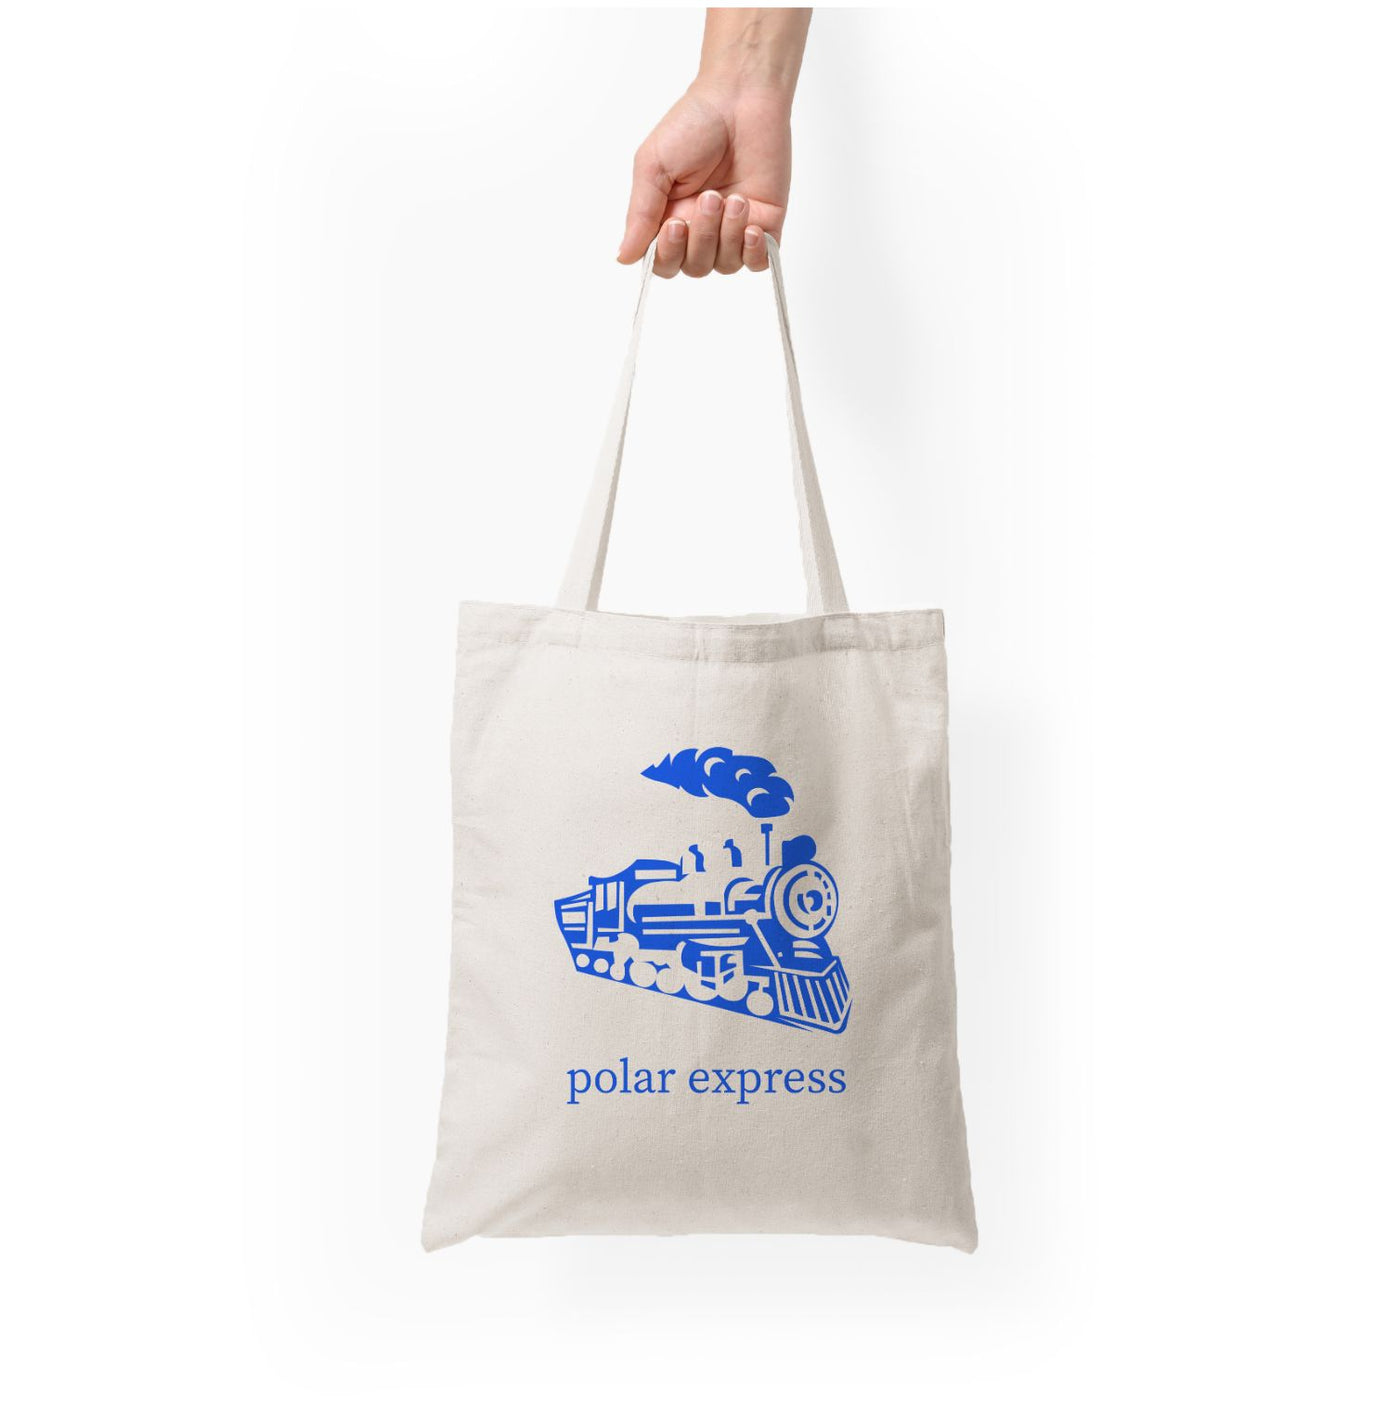 The Train - Polar Express Tote Bag